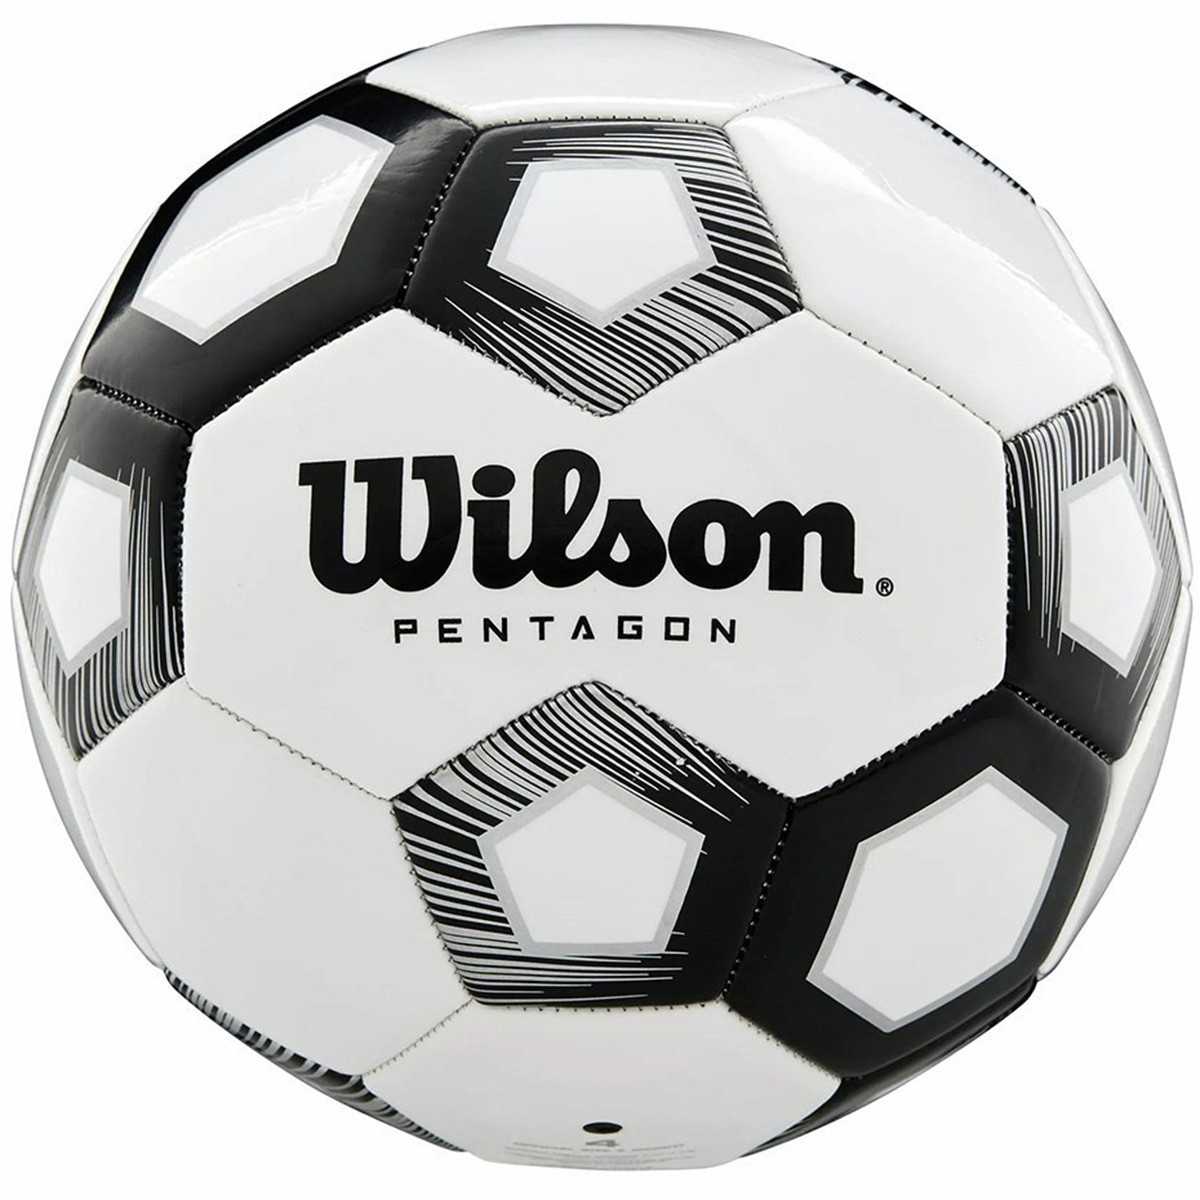 Wilson Pentagon futbolo kamuolys